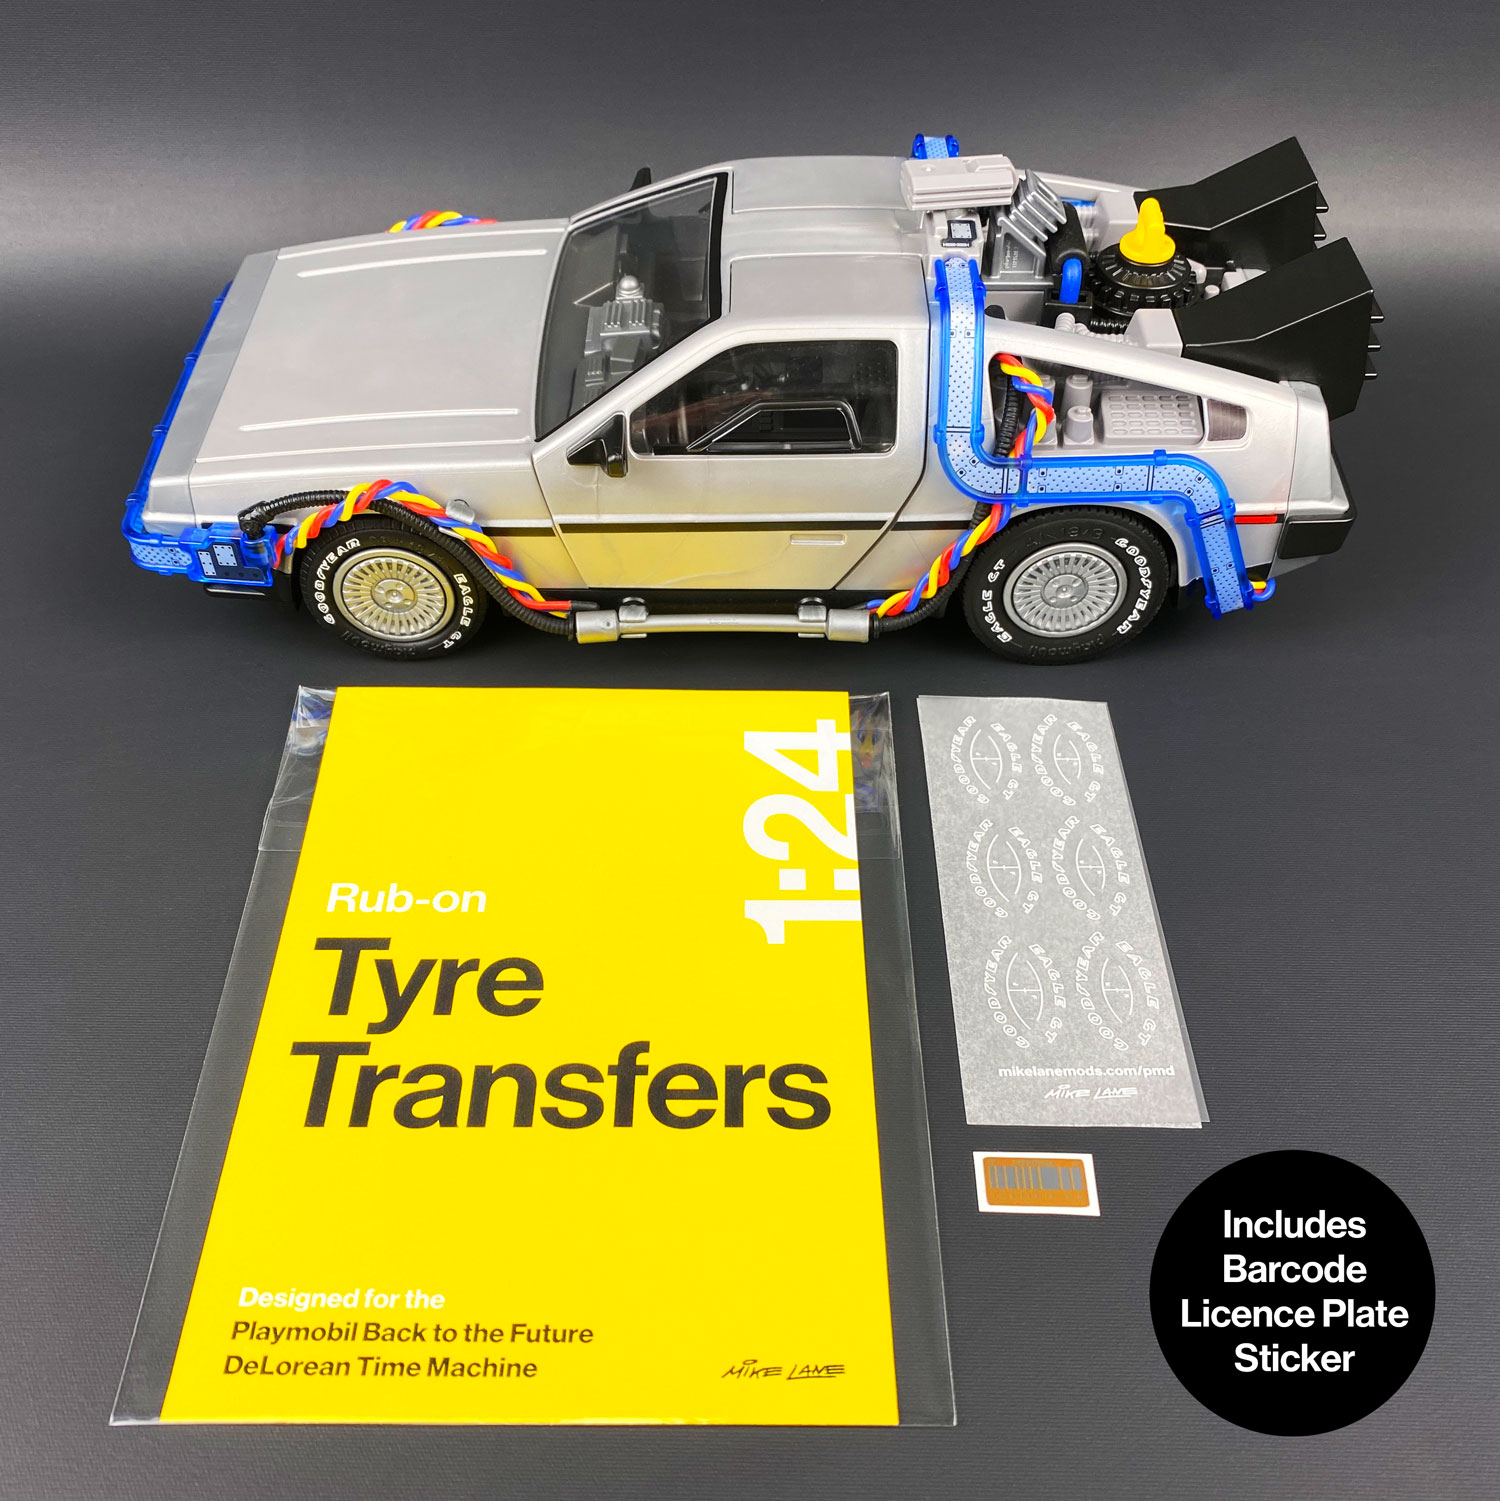 Tyre Transfers mod for Playmobil DeLorean model